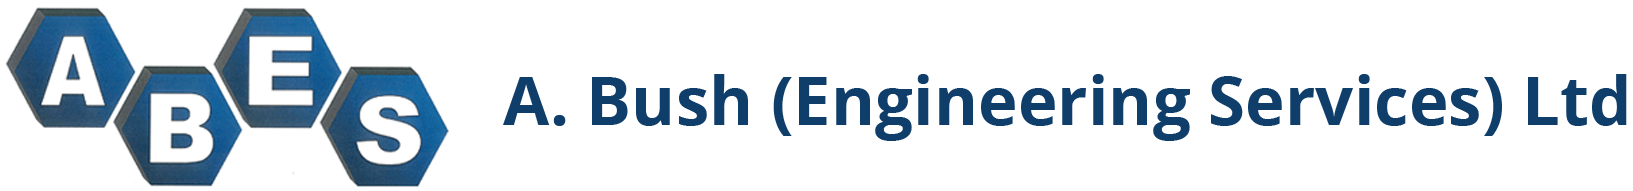 A Bush (Engineering Services) Ltd Logo